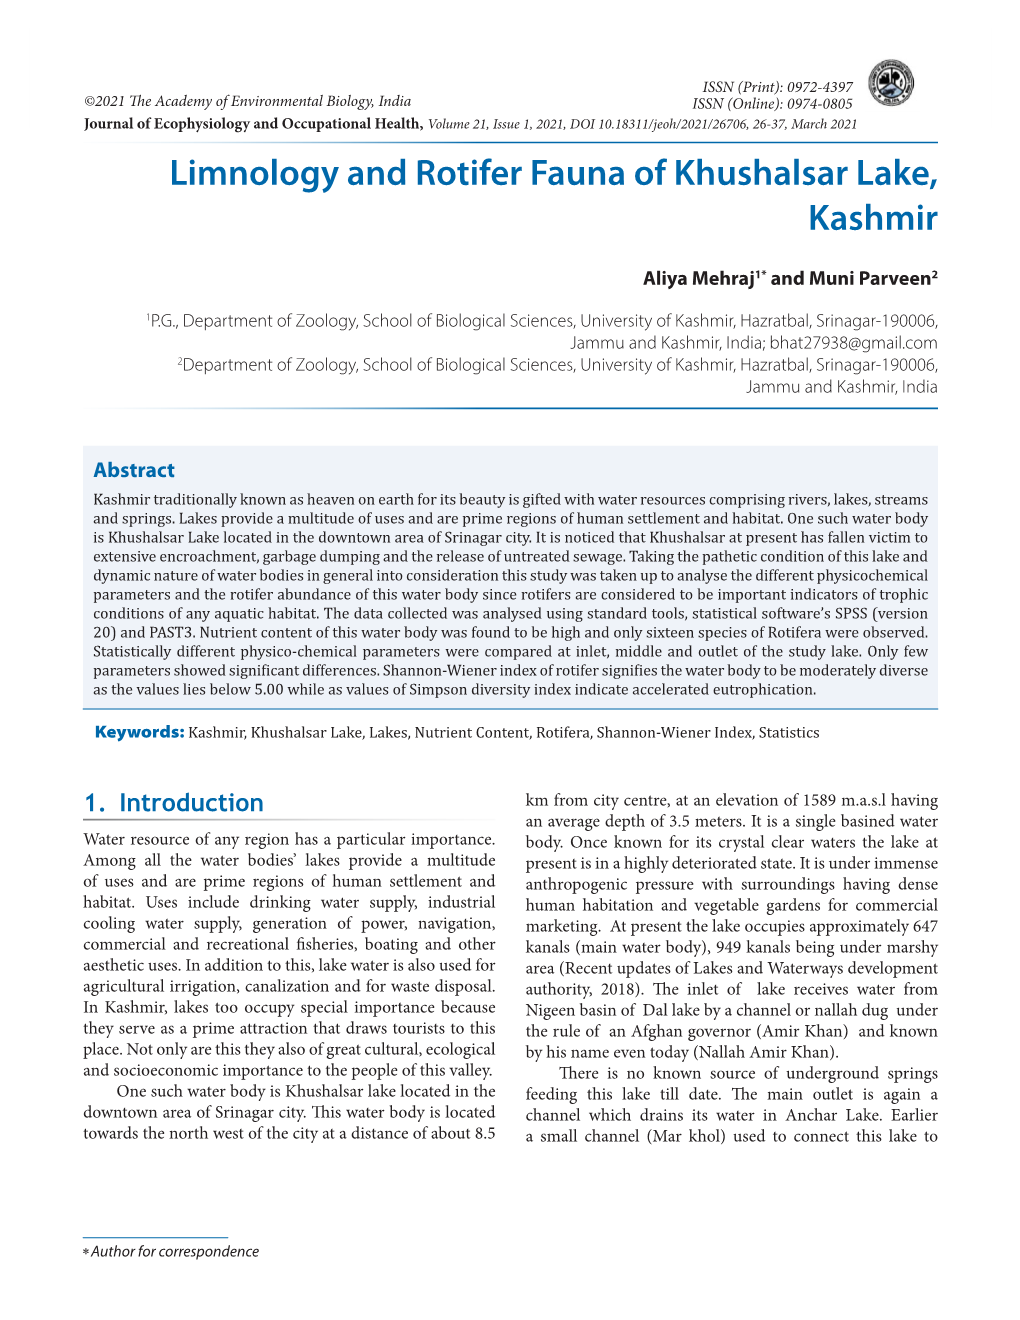 Limnology and Rotifer Fauna of Khushalsar Lake, Kashmir